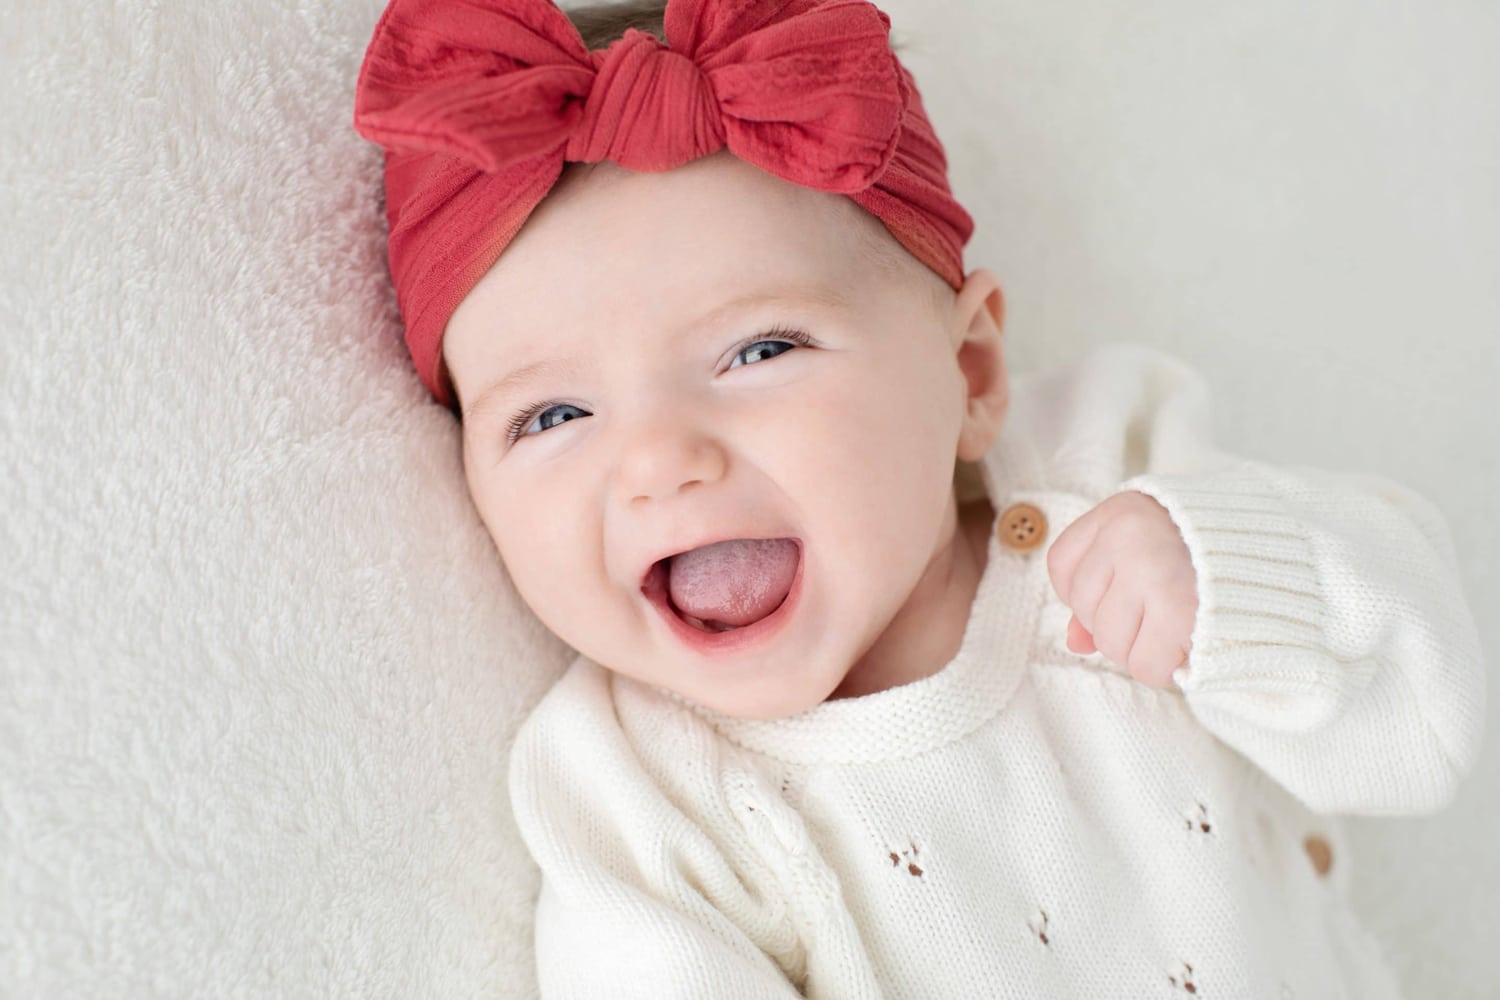 Newborn baby with red headband smiles.